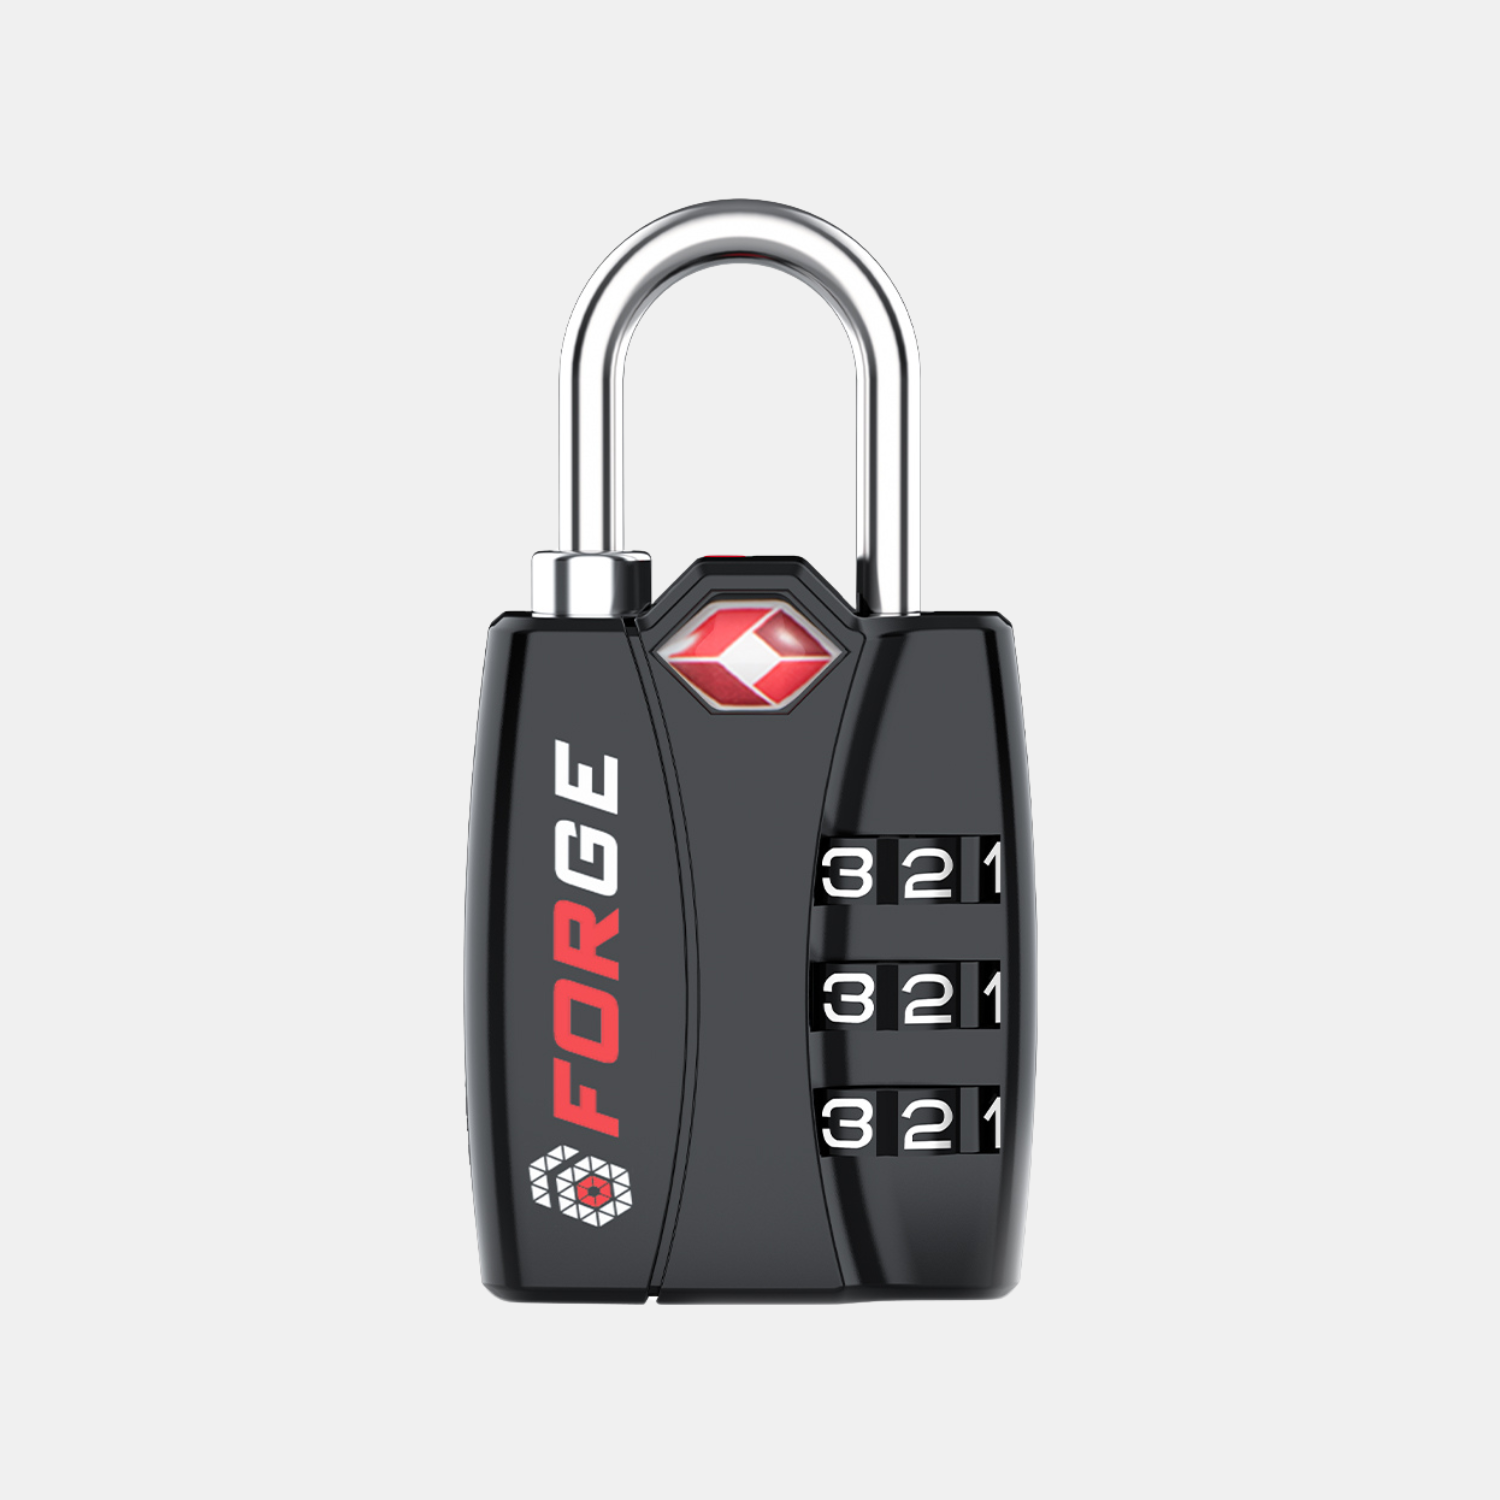 TSA-Approved Luggage Locks: 3-Digit Combination, Open Alert Indicator, Matt Black 2 Locks